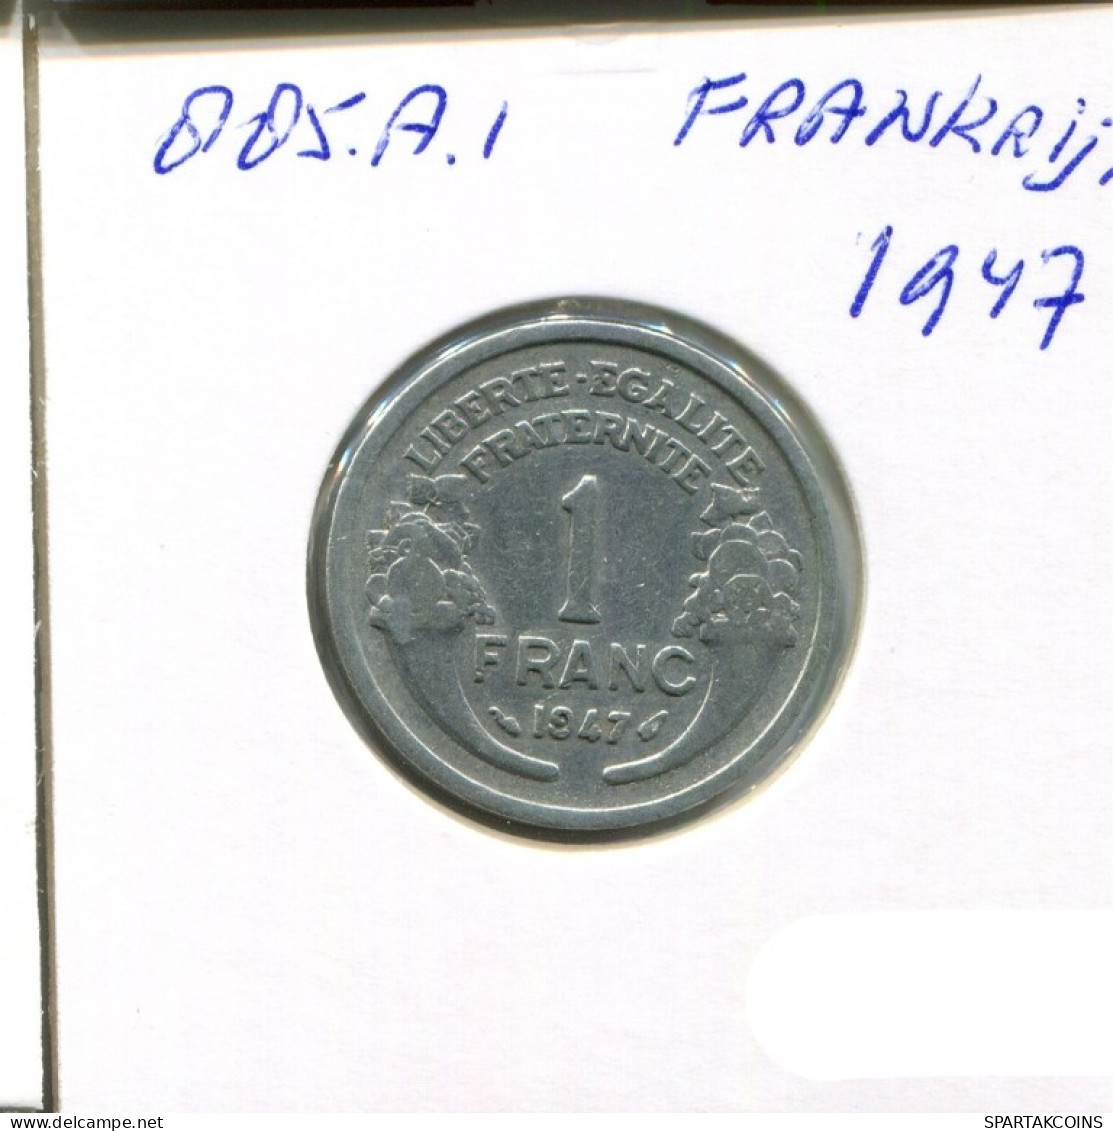 1 FRANC 1947 FRANCE Coin French Coin #AN290.U.A - 1 Franc